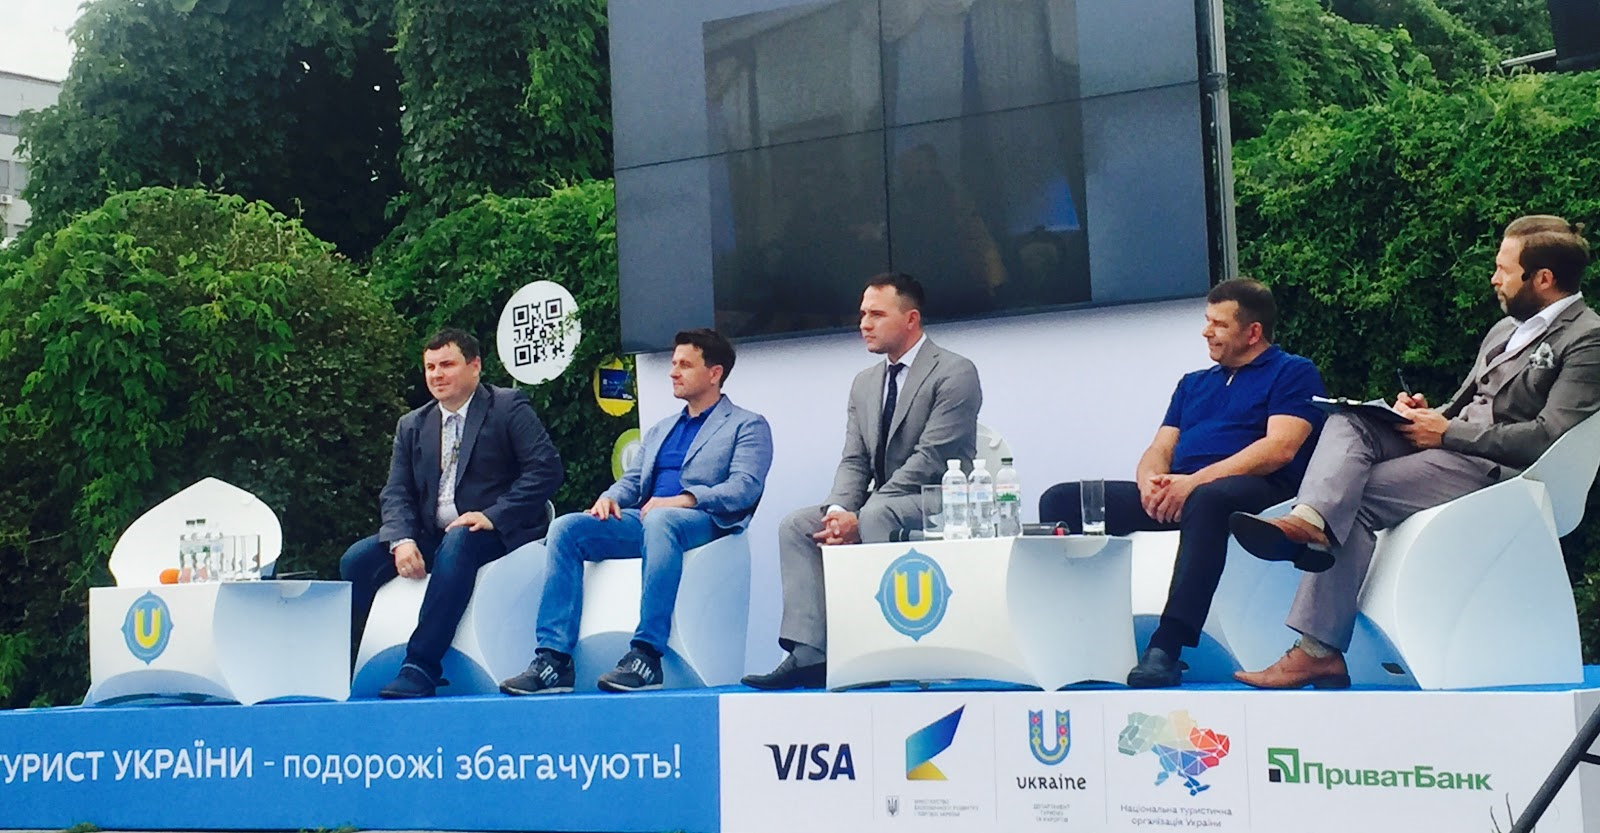 ПриватБанк запускає тестовий додаток «Турист України»